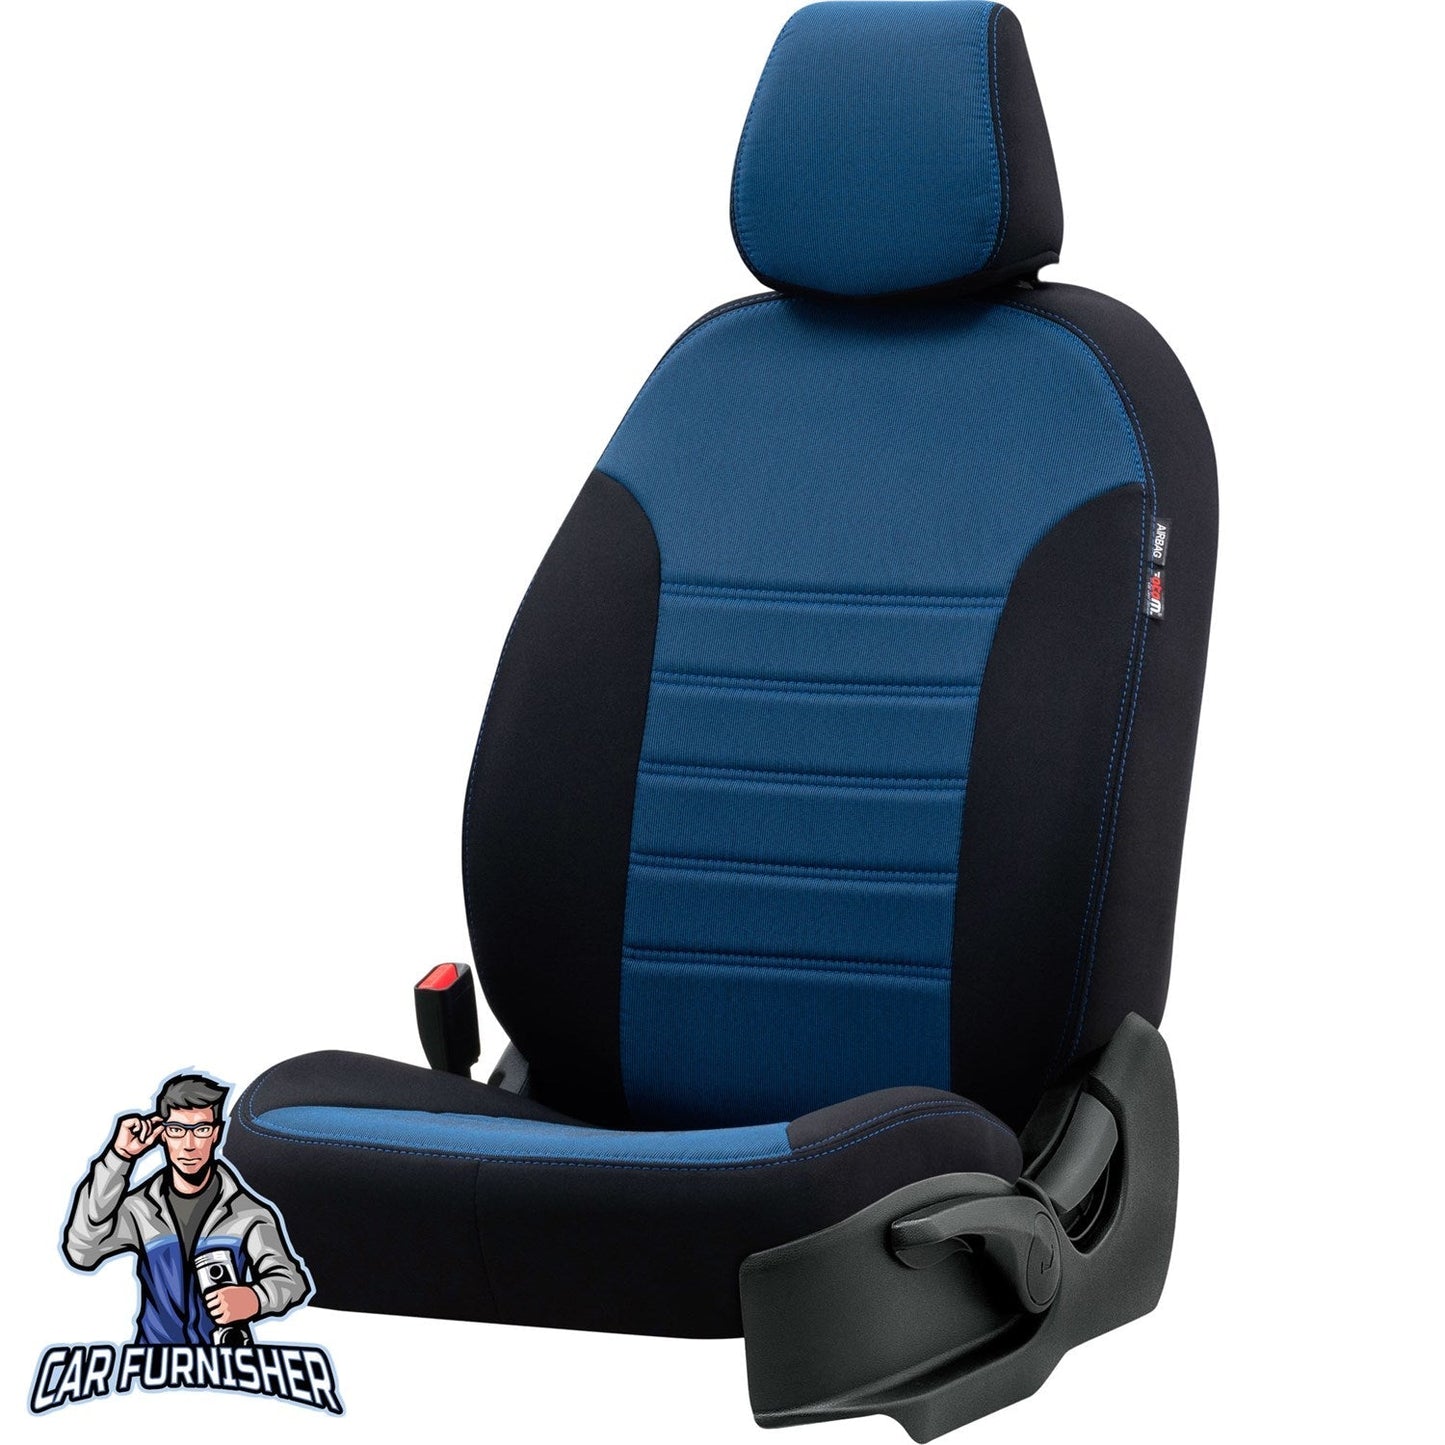 Ford Transit Seat Covers Original Jacquard Design Blue Jacquard Fabric